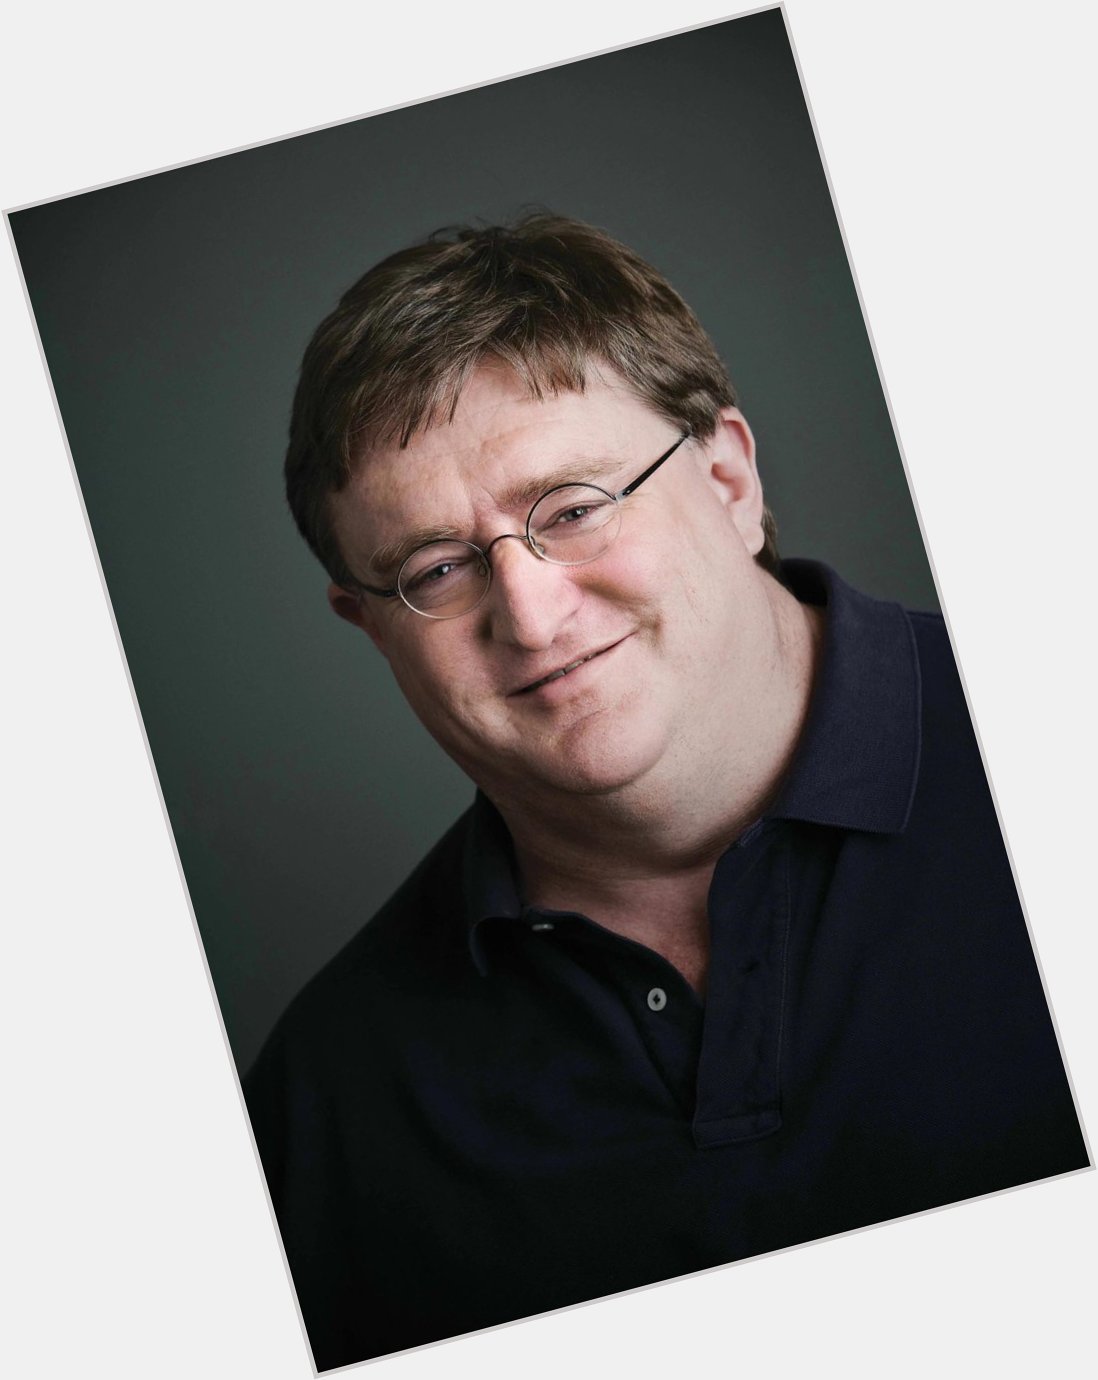 Happy birthday to Gabe Newell!  